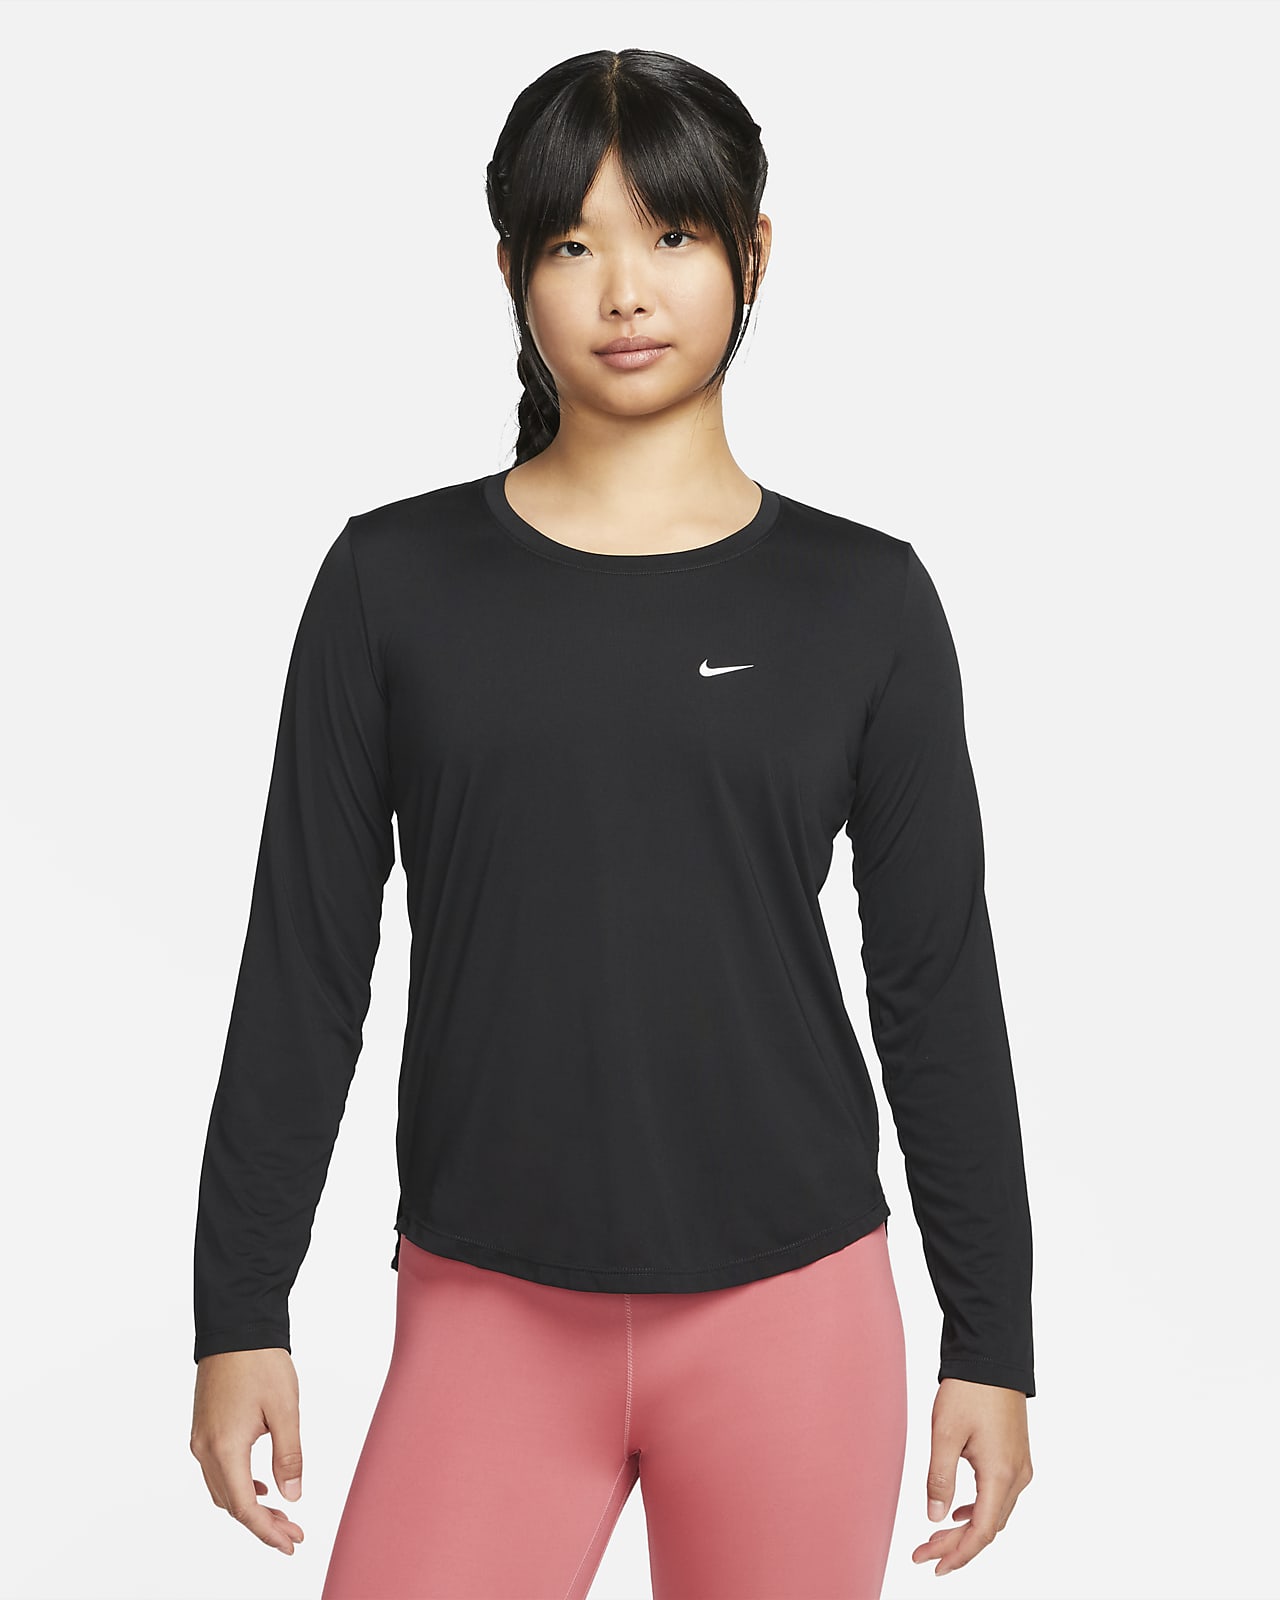 Nike Dri-FIT One Women's Long-Sleeve Top